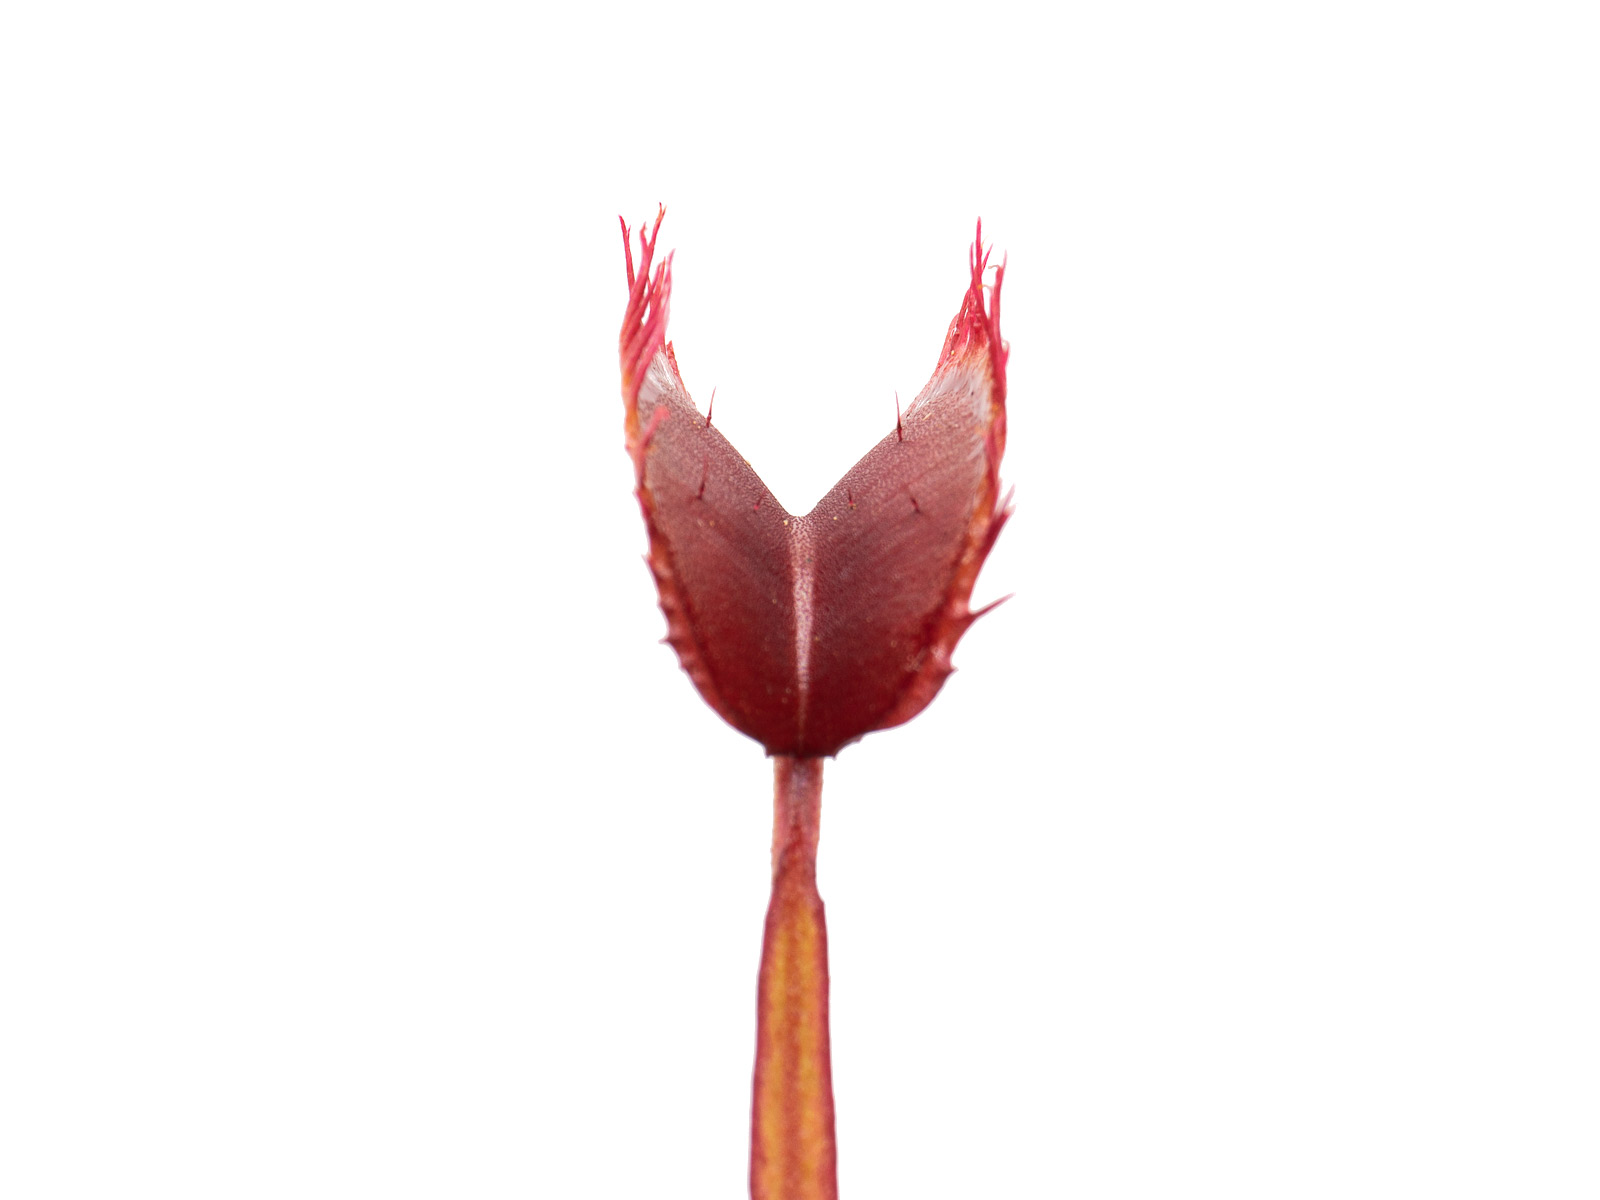 Dionaea muscipula - All Red Fused